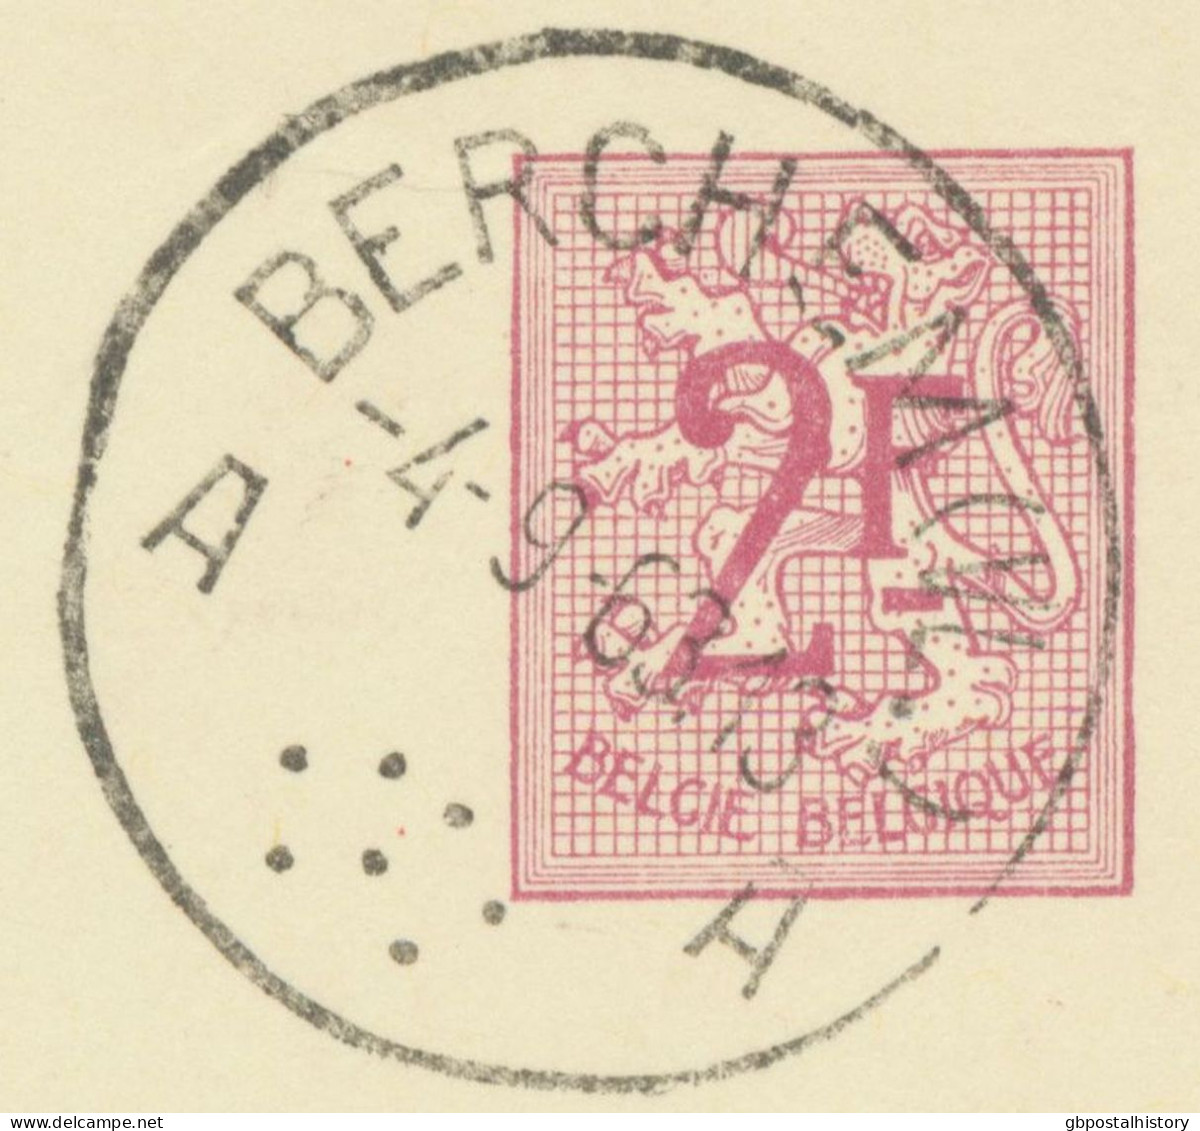 BELGIUM VILLAGE POSTMARKS  BERCHEM (VL.) A (now Kluisbergen) SC With Dots 1963 (Postal Stationery 2 F, PUBLIBEL 1940) - Annulli A Punti